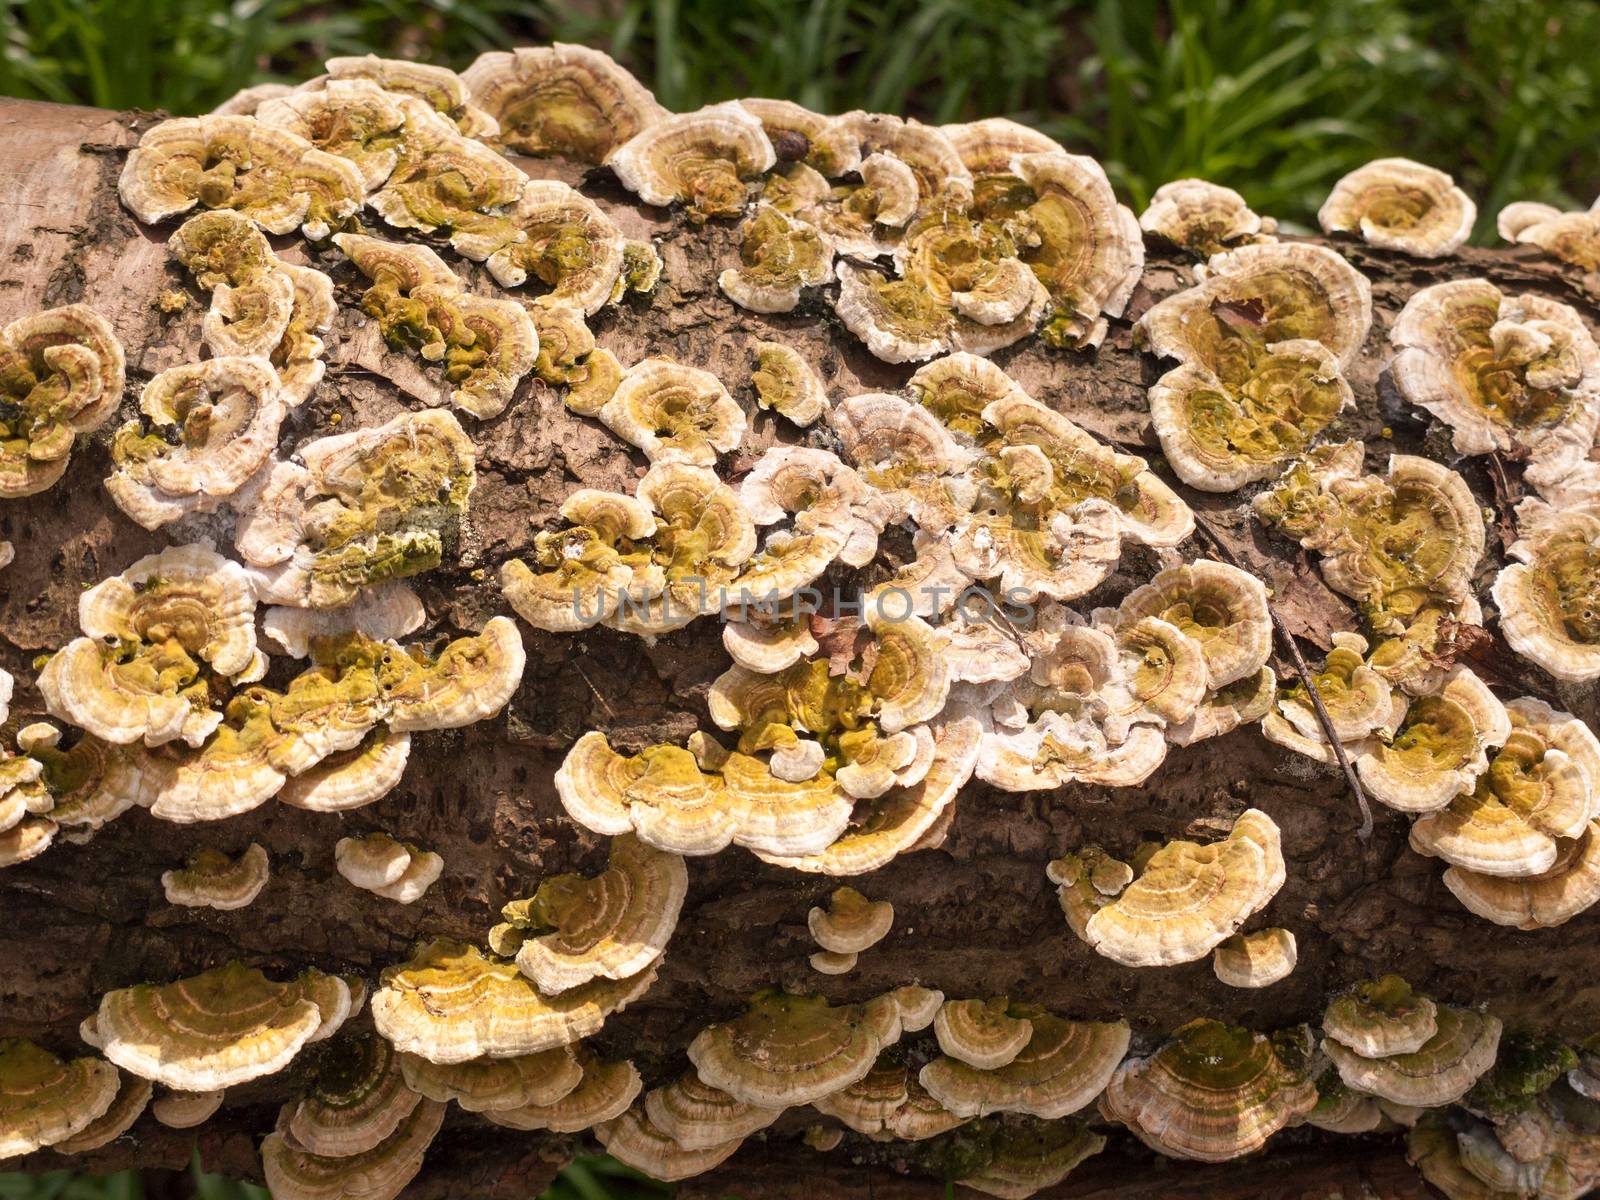 plenty of small bracket mushrooms all along fallen tree trunk on ground close up by callumrc